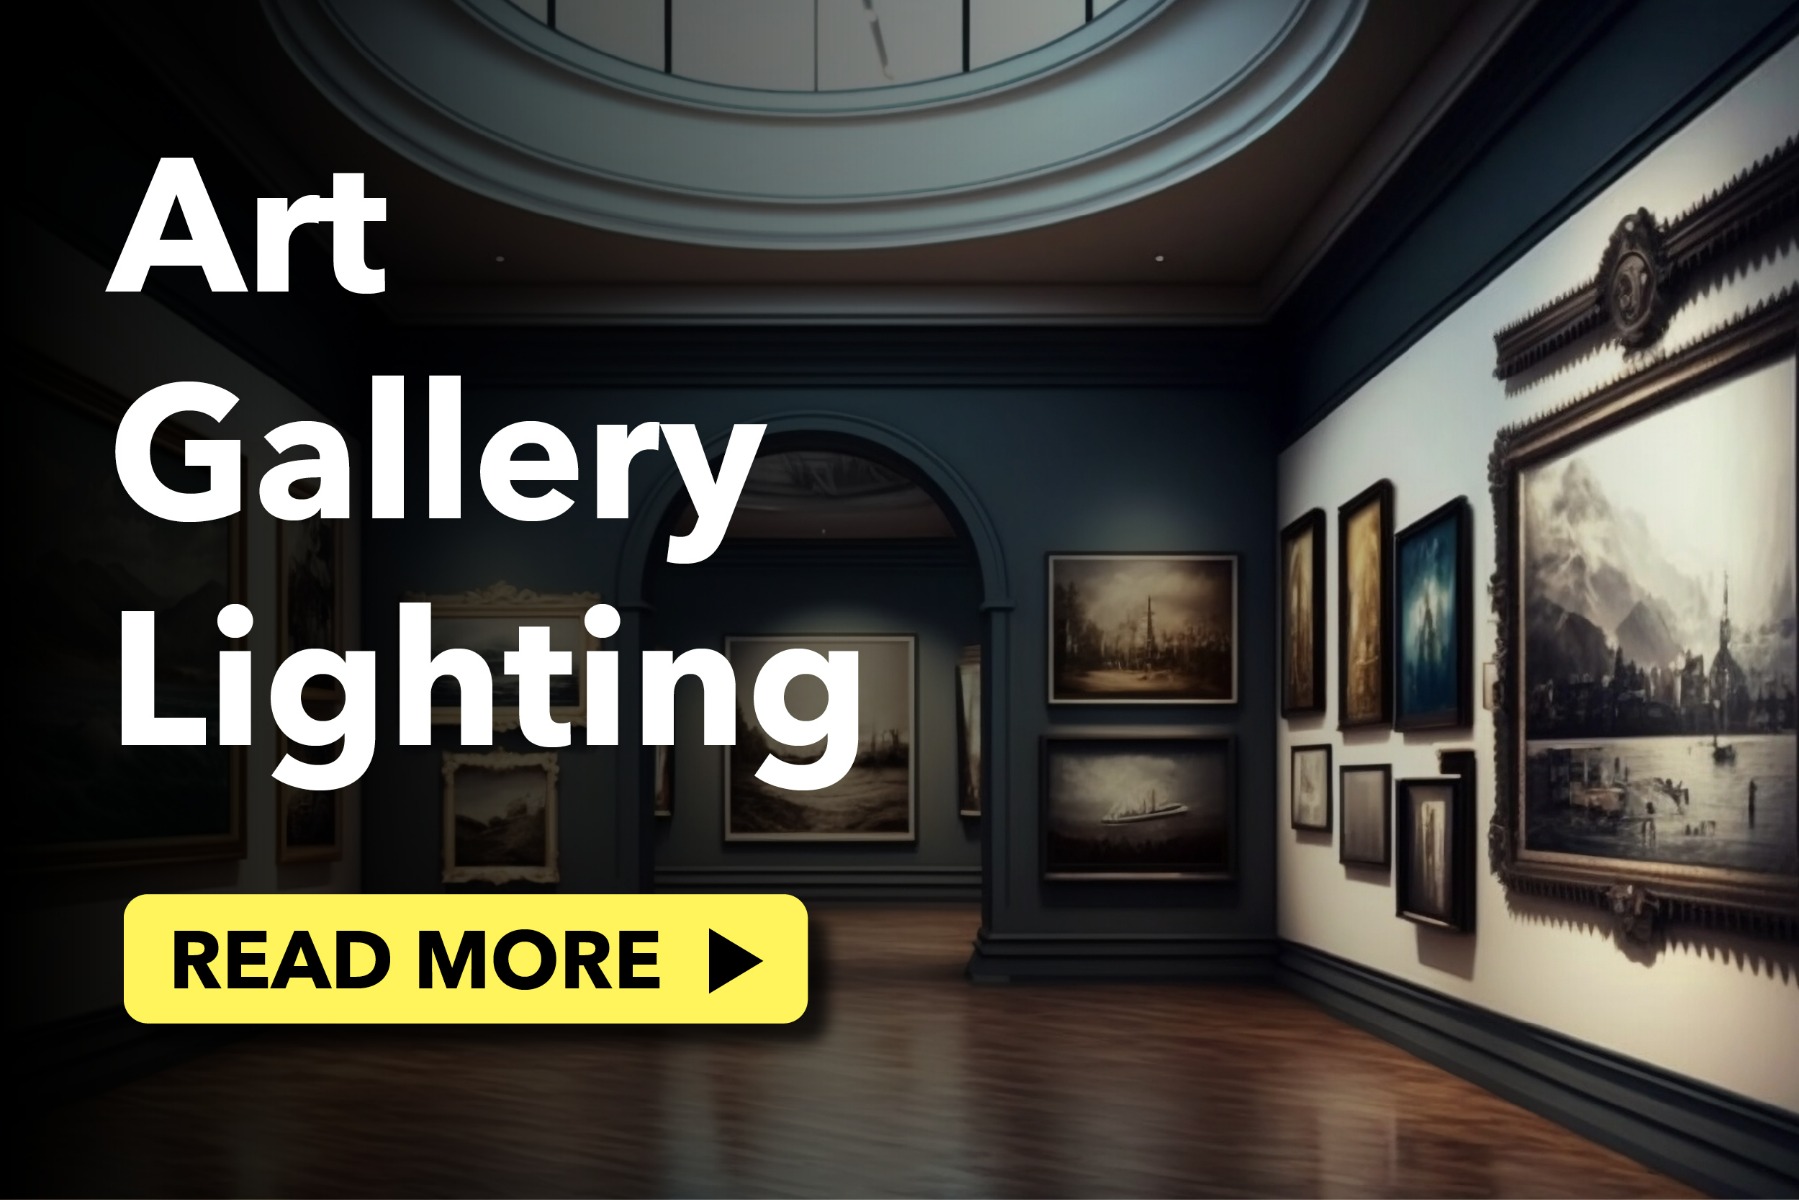 Art Gallery Lighting